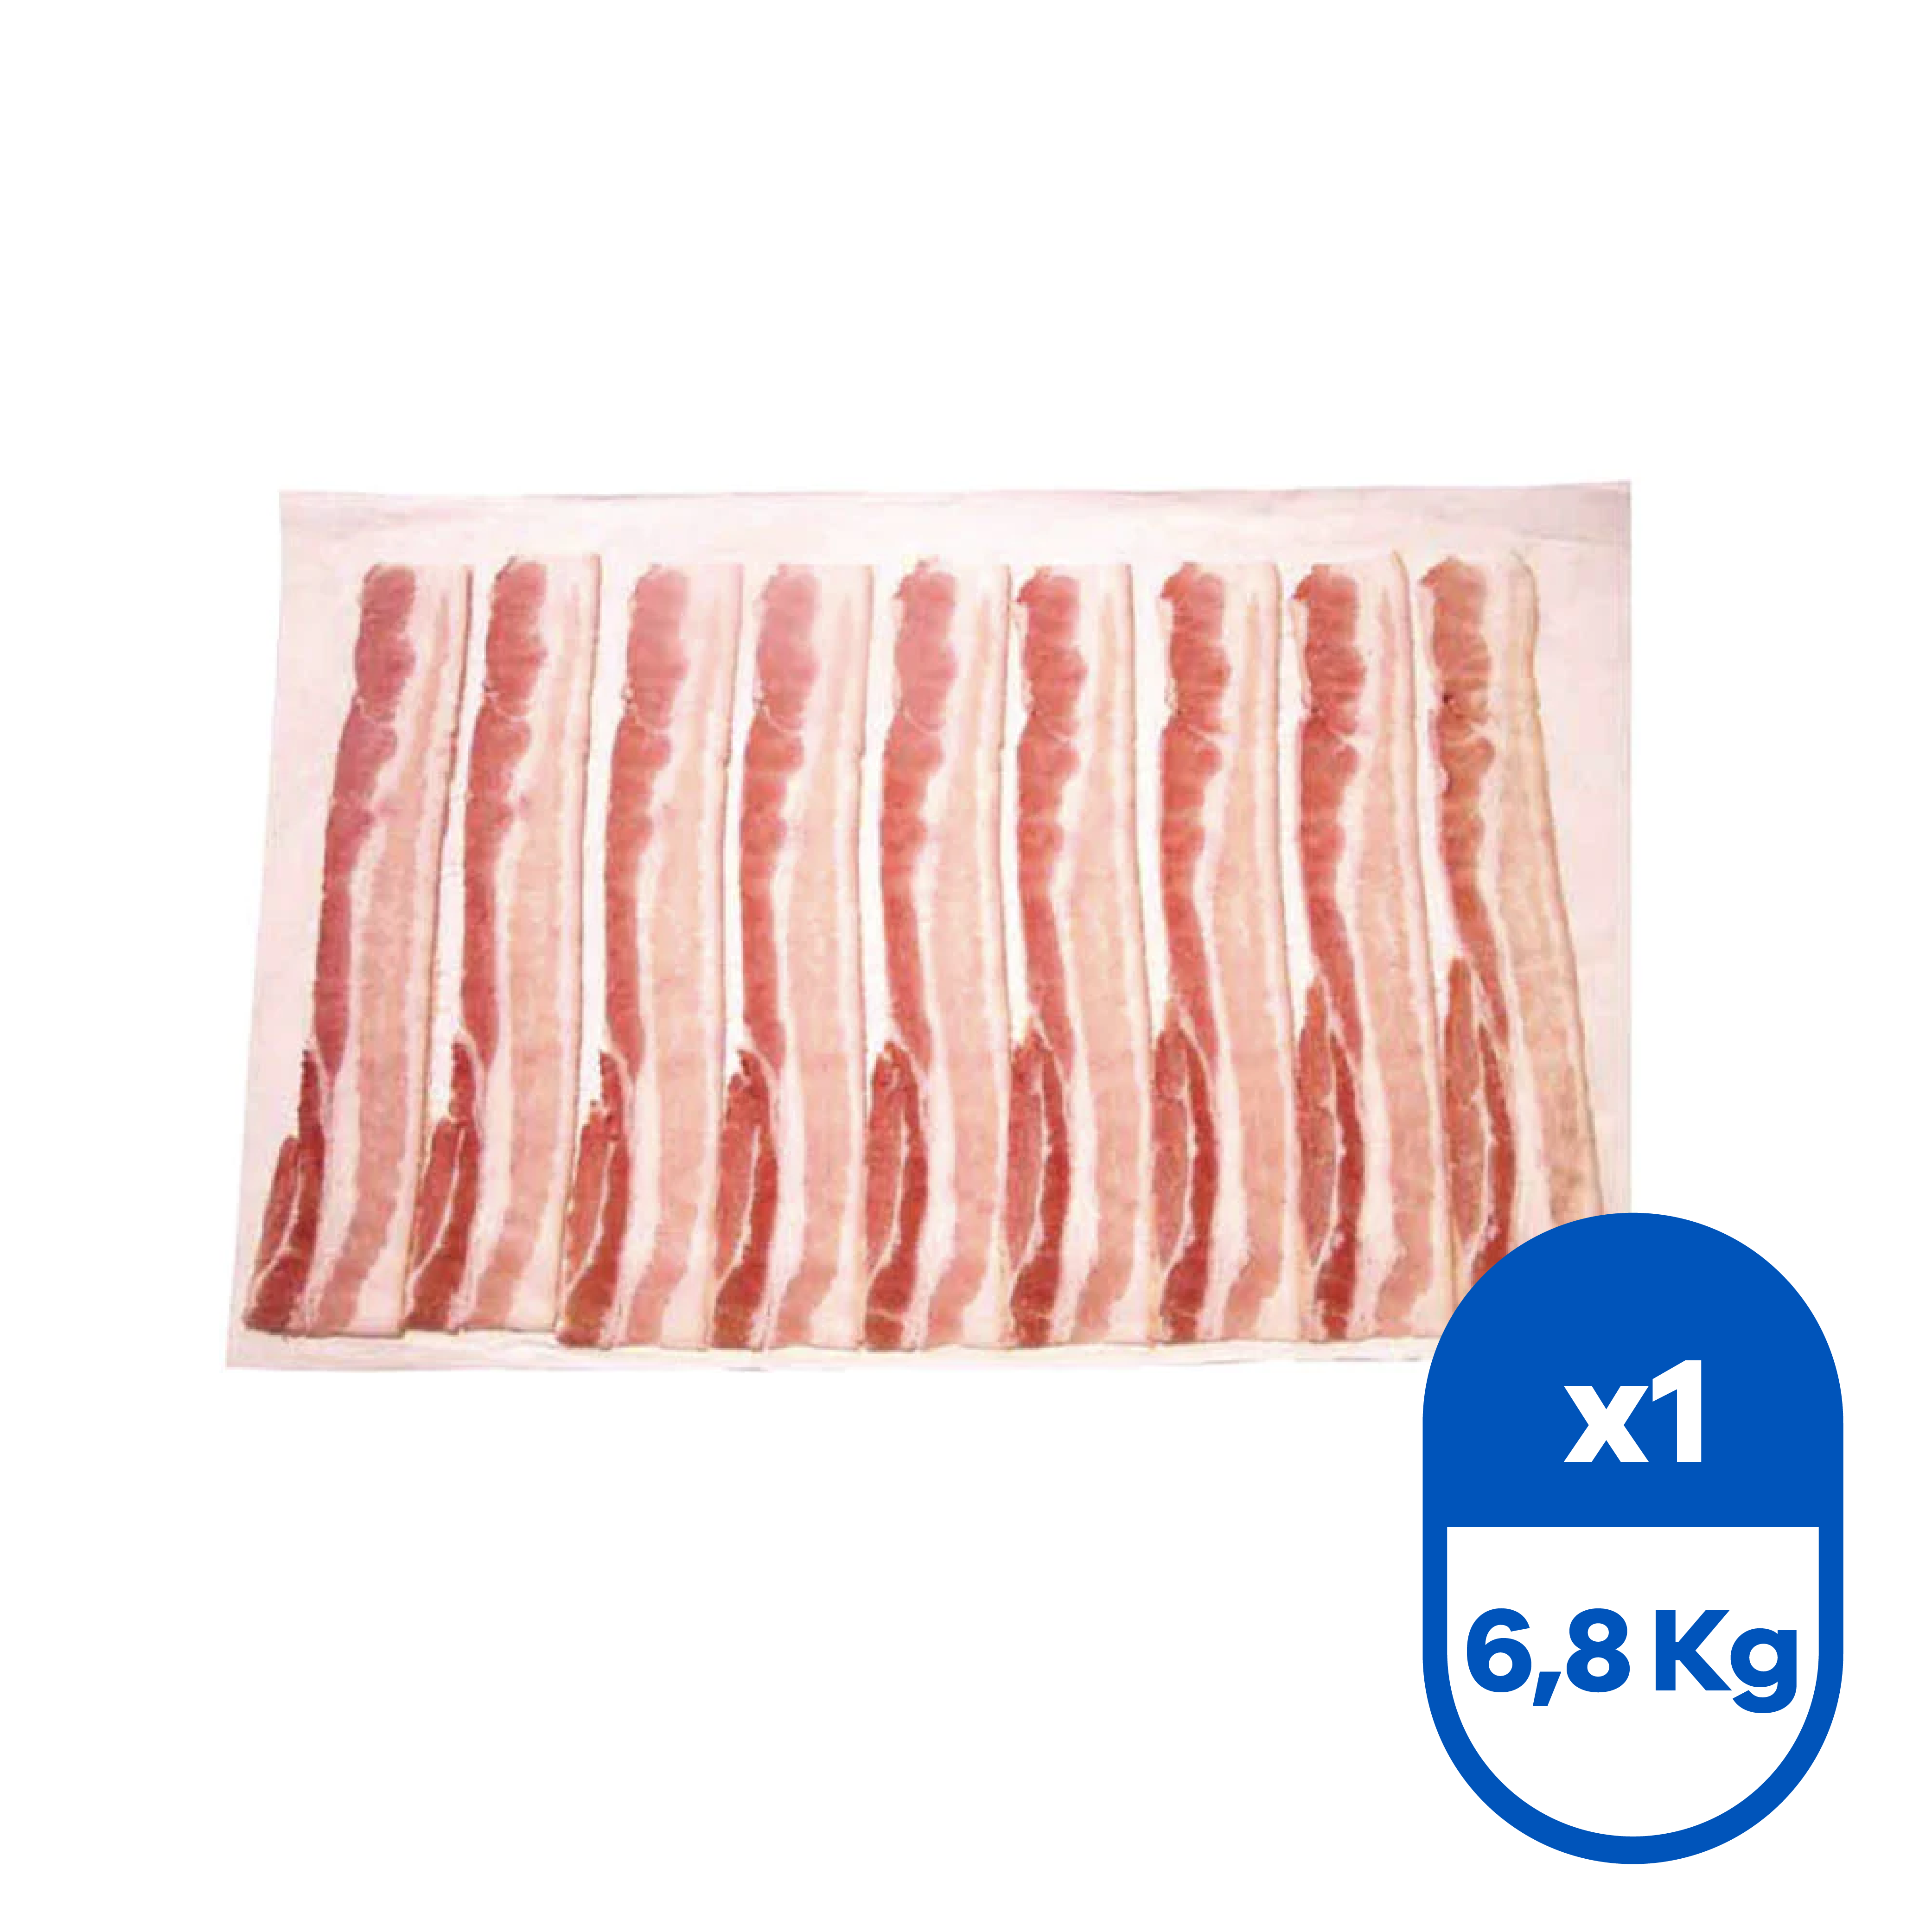 Bacon 6,8 Kg